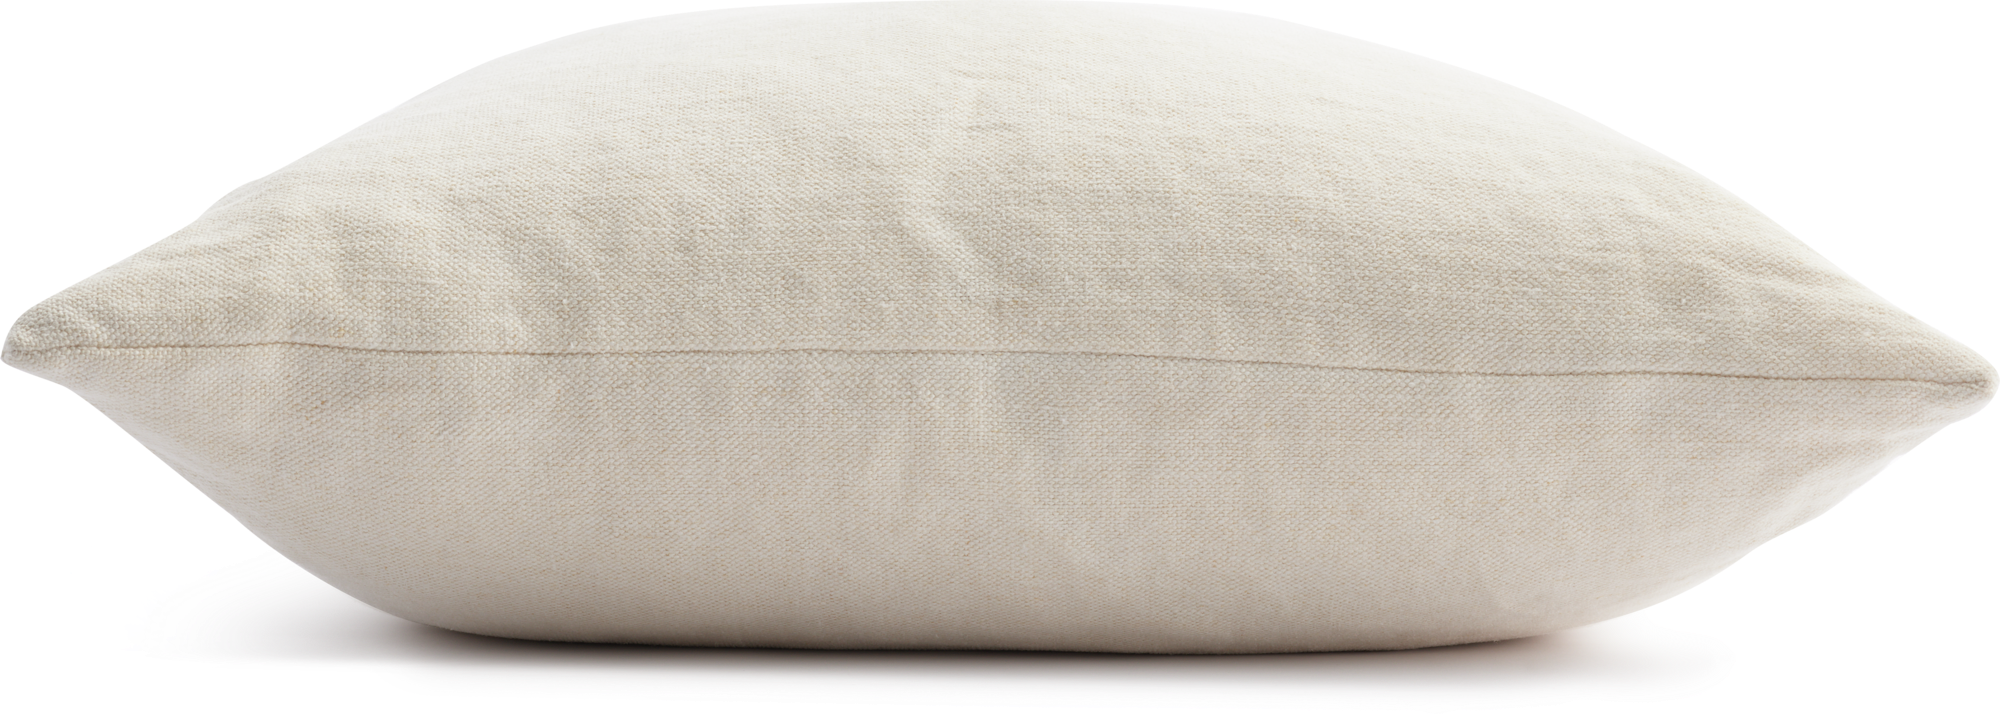 Isi decorative pillow